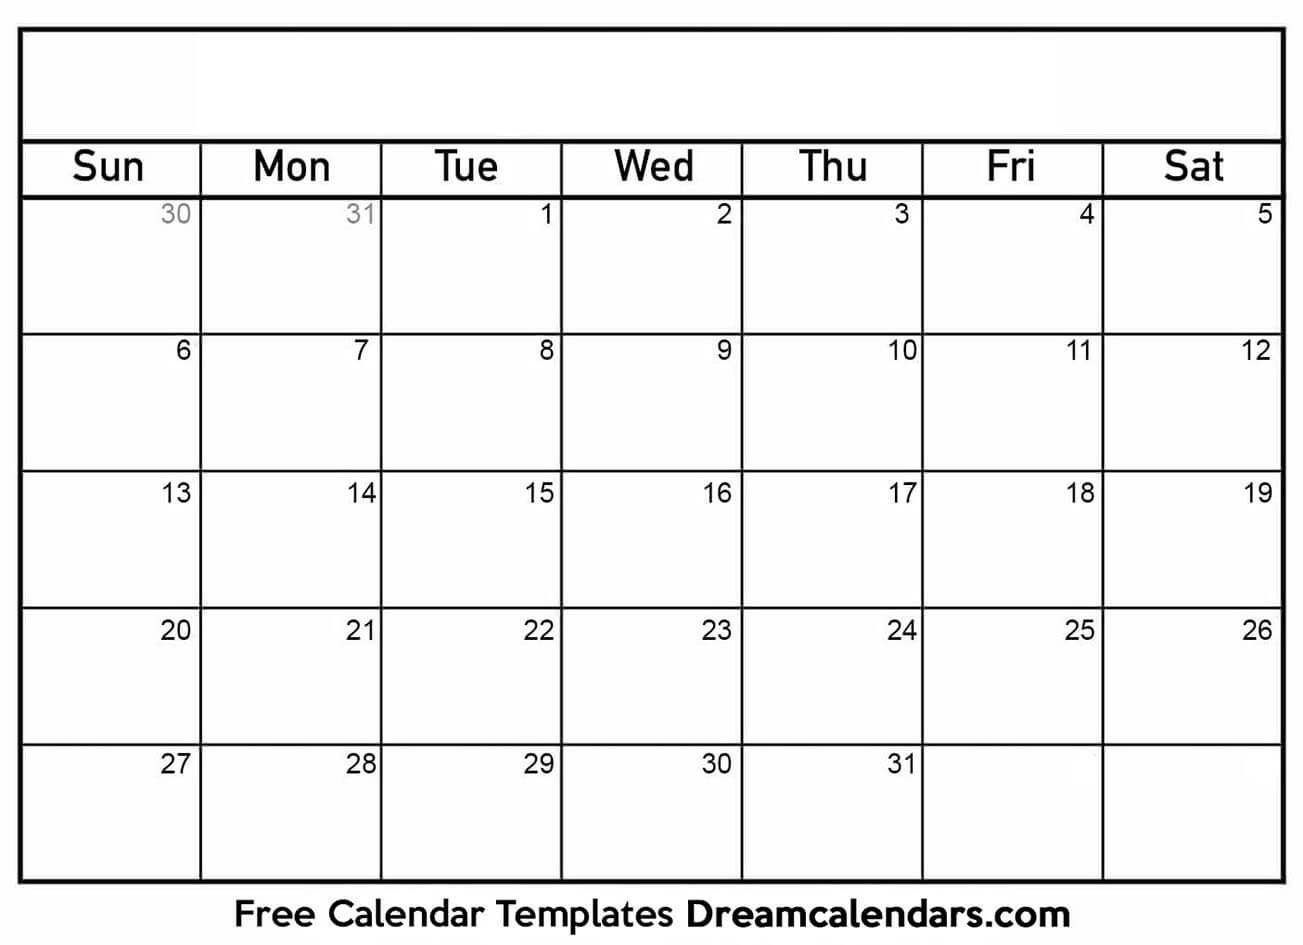 Dashing Blank Calenders With No Dates | Free Calendar Calendar Template No Dates